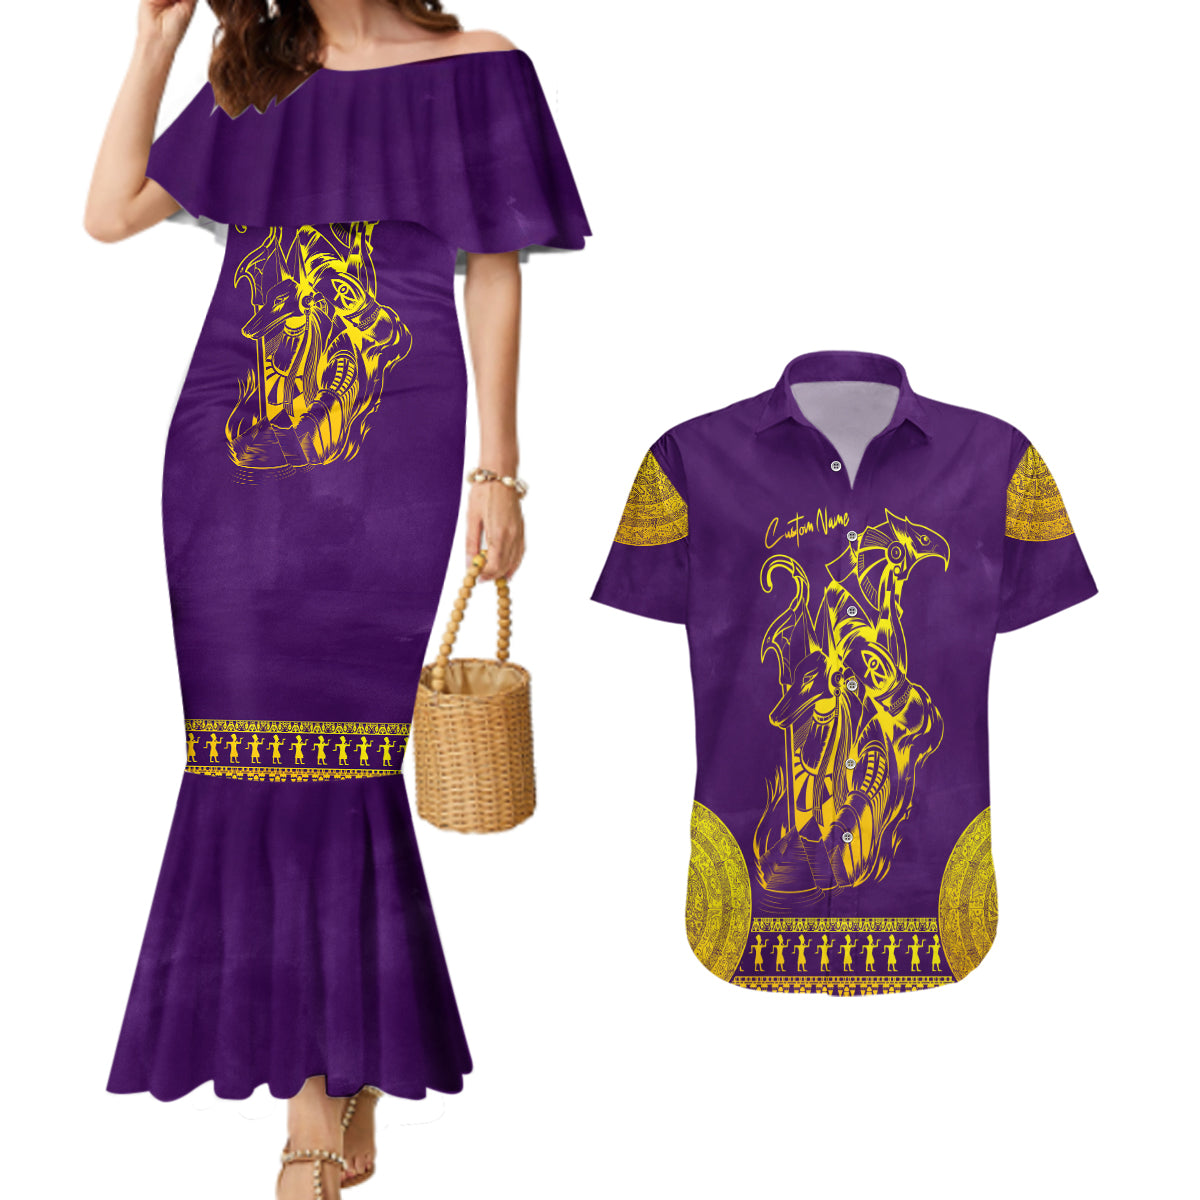 Anubis and Horus Couples Matching Mermaid Dress and Hawaiian Shirt Egyptian God Purple